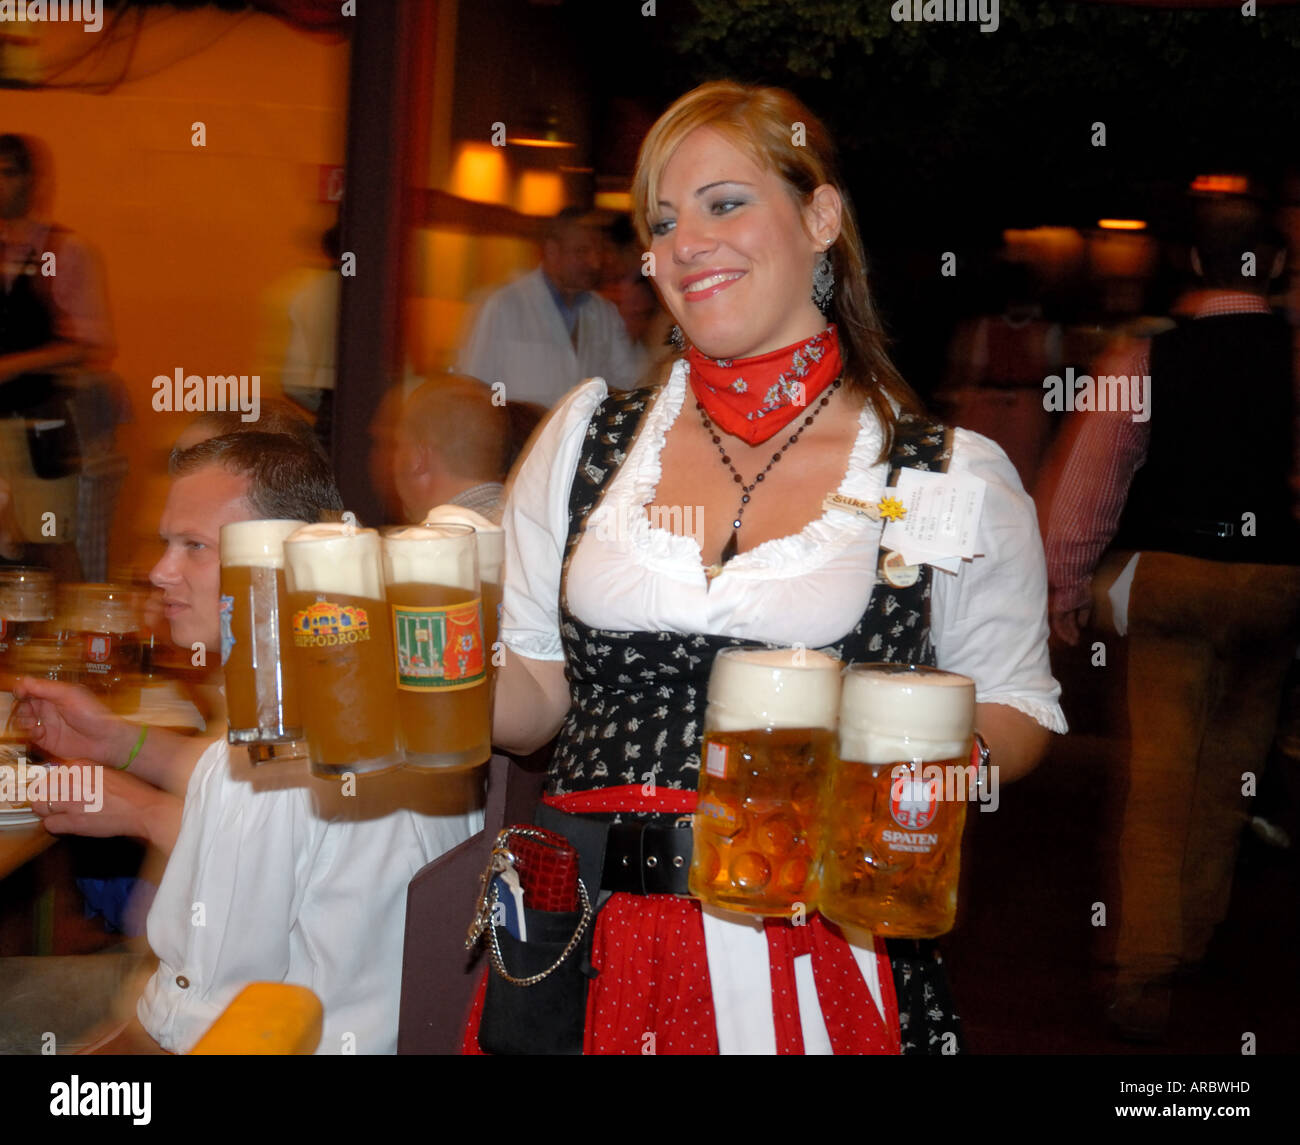 Oktoberfest waitress carrying beers Stock Photo - Alamy